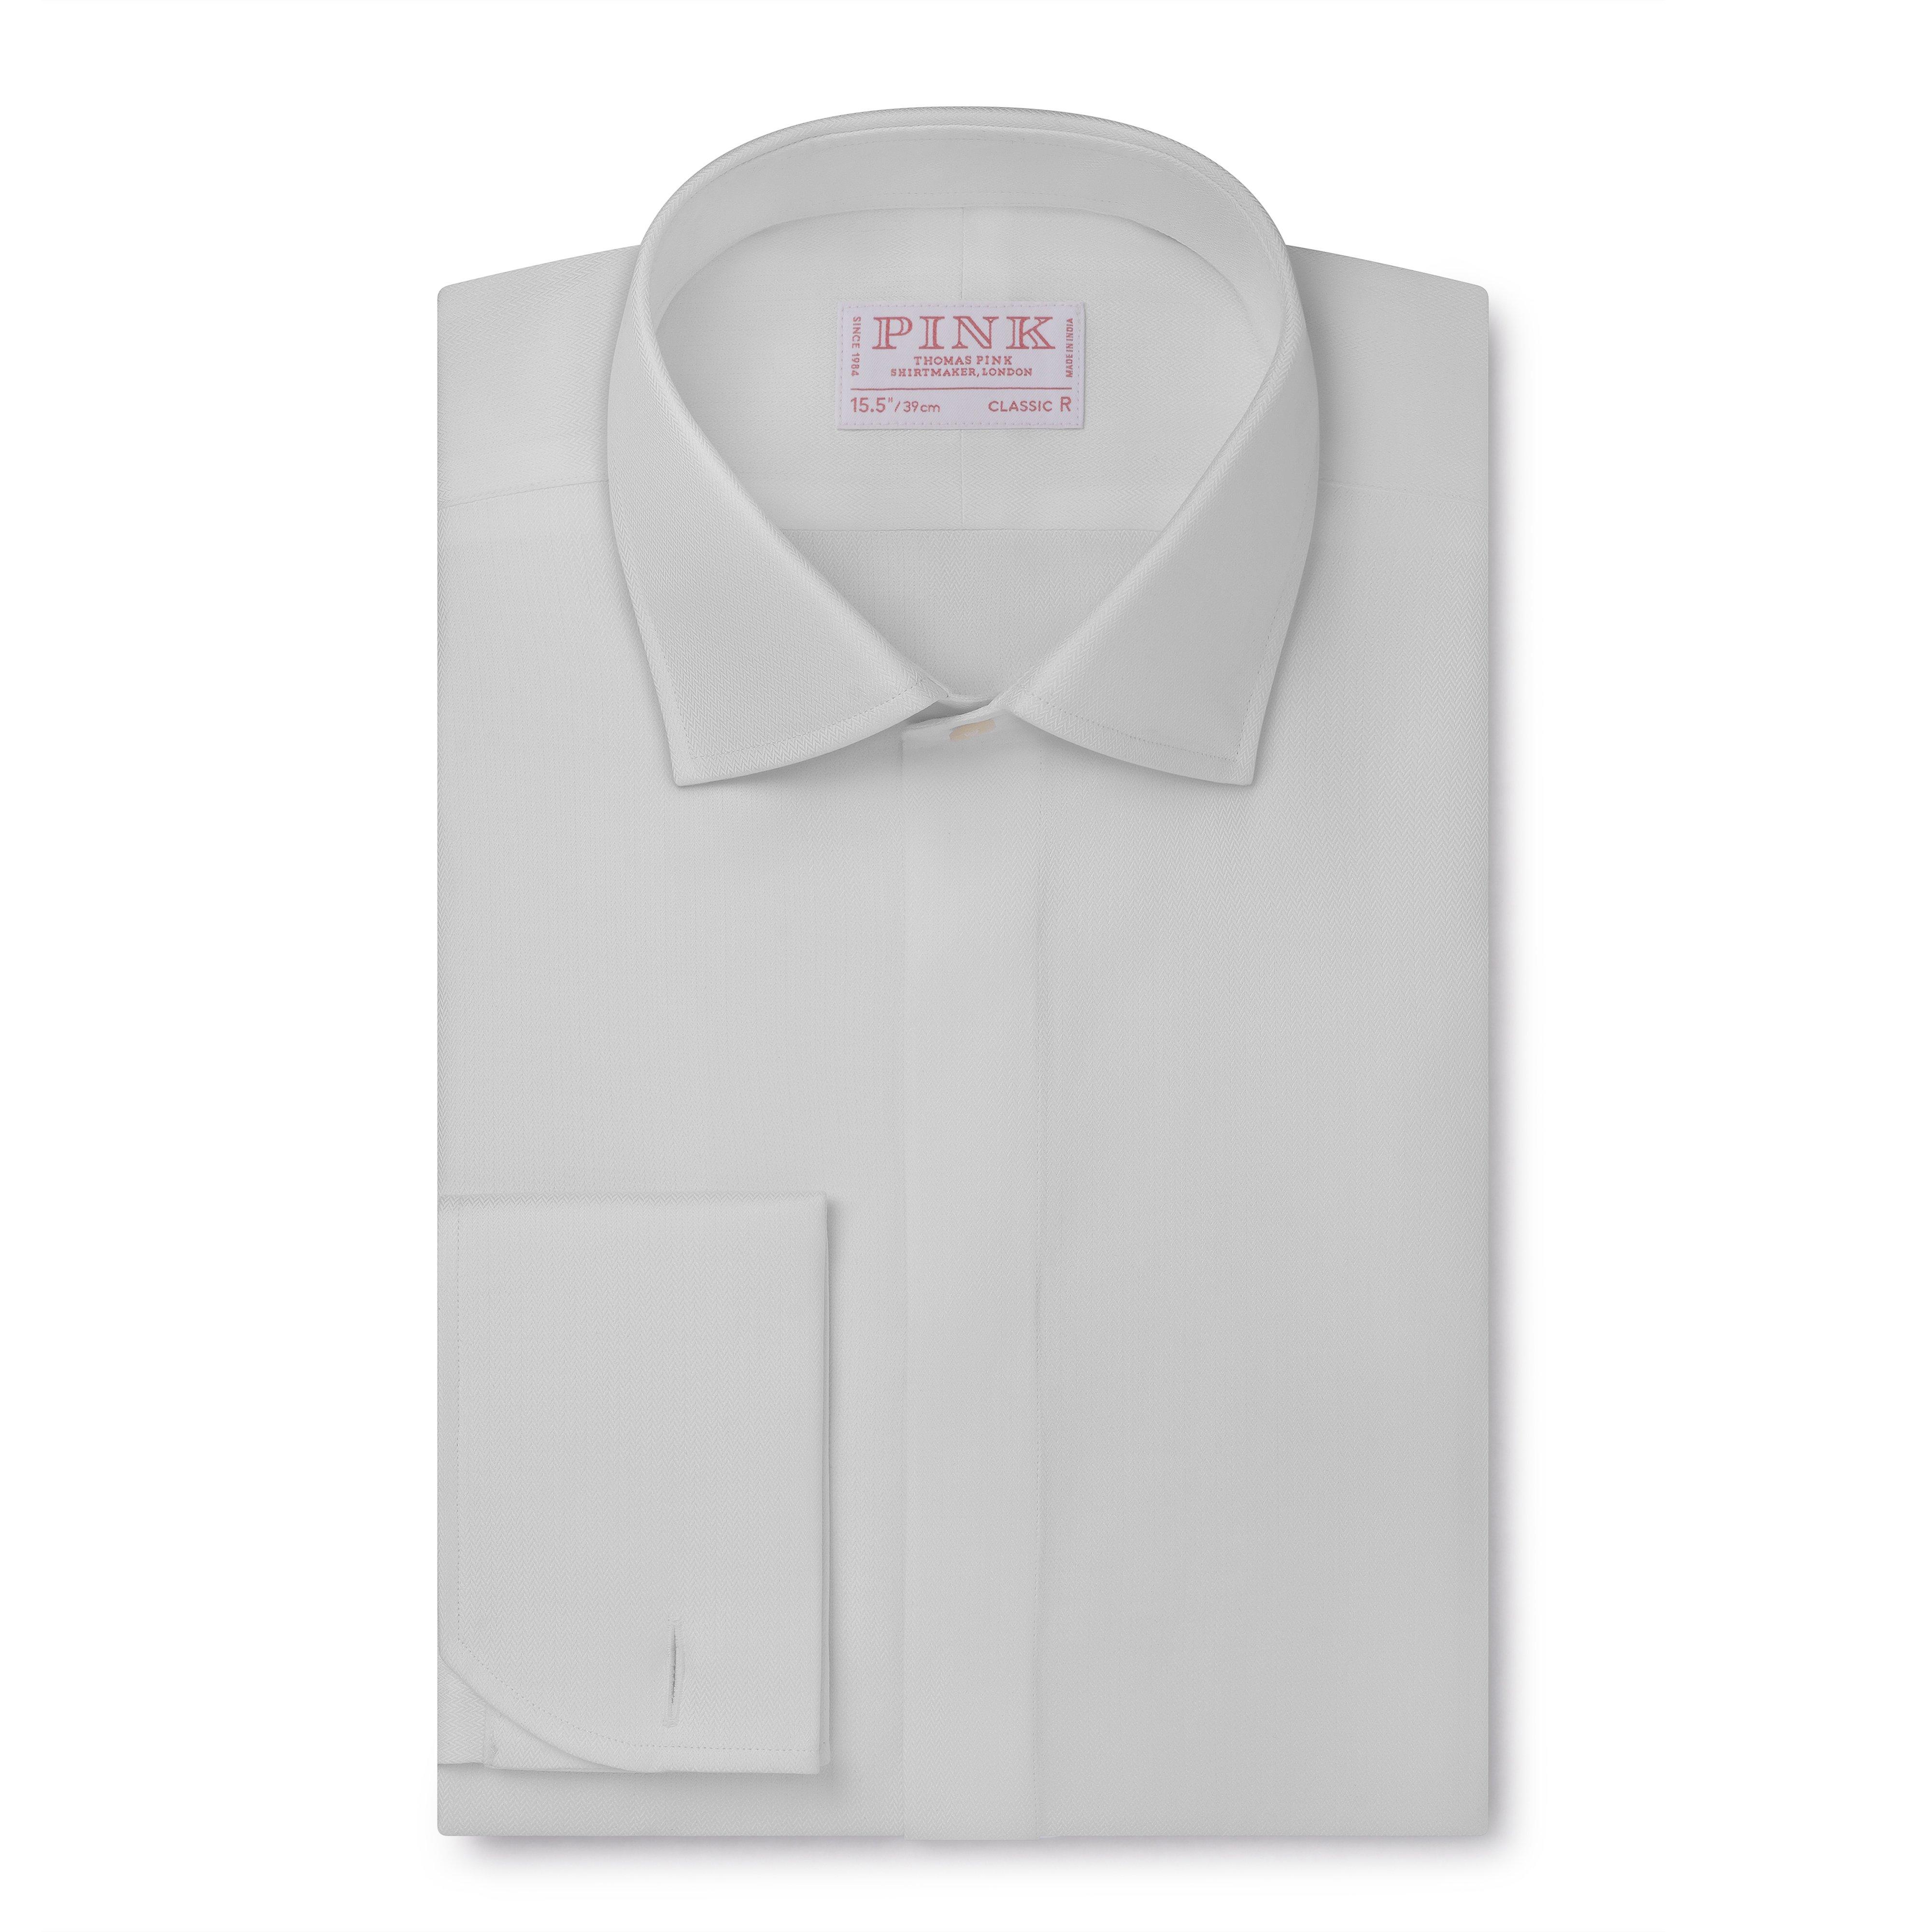 Details: The Thomas Pink Evening Shirt